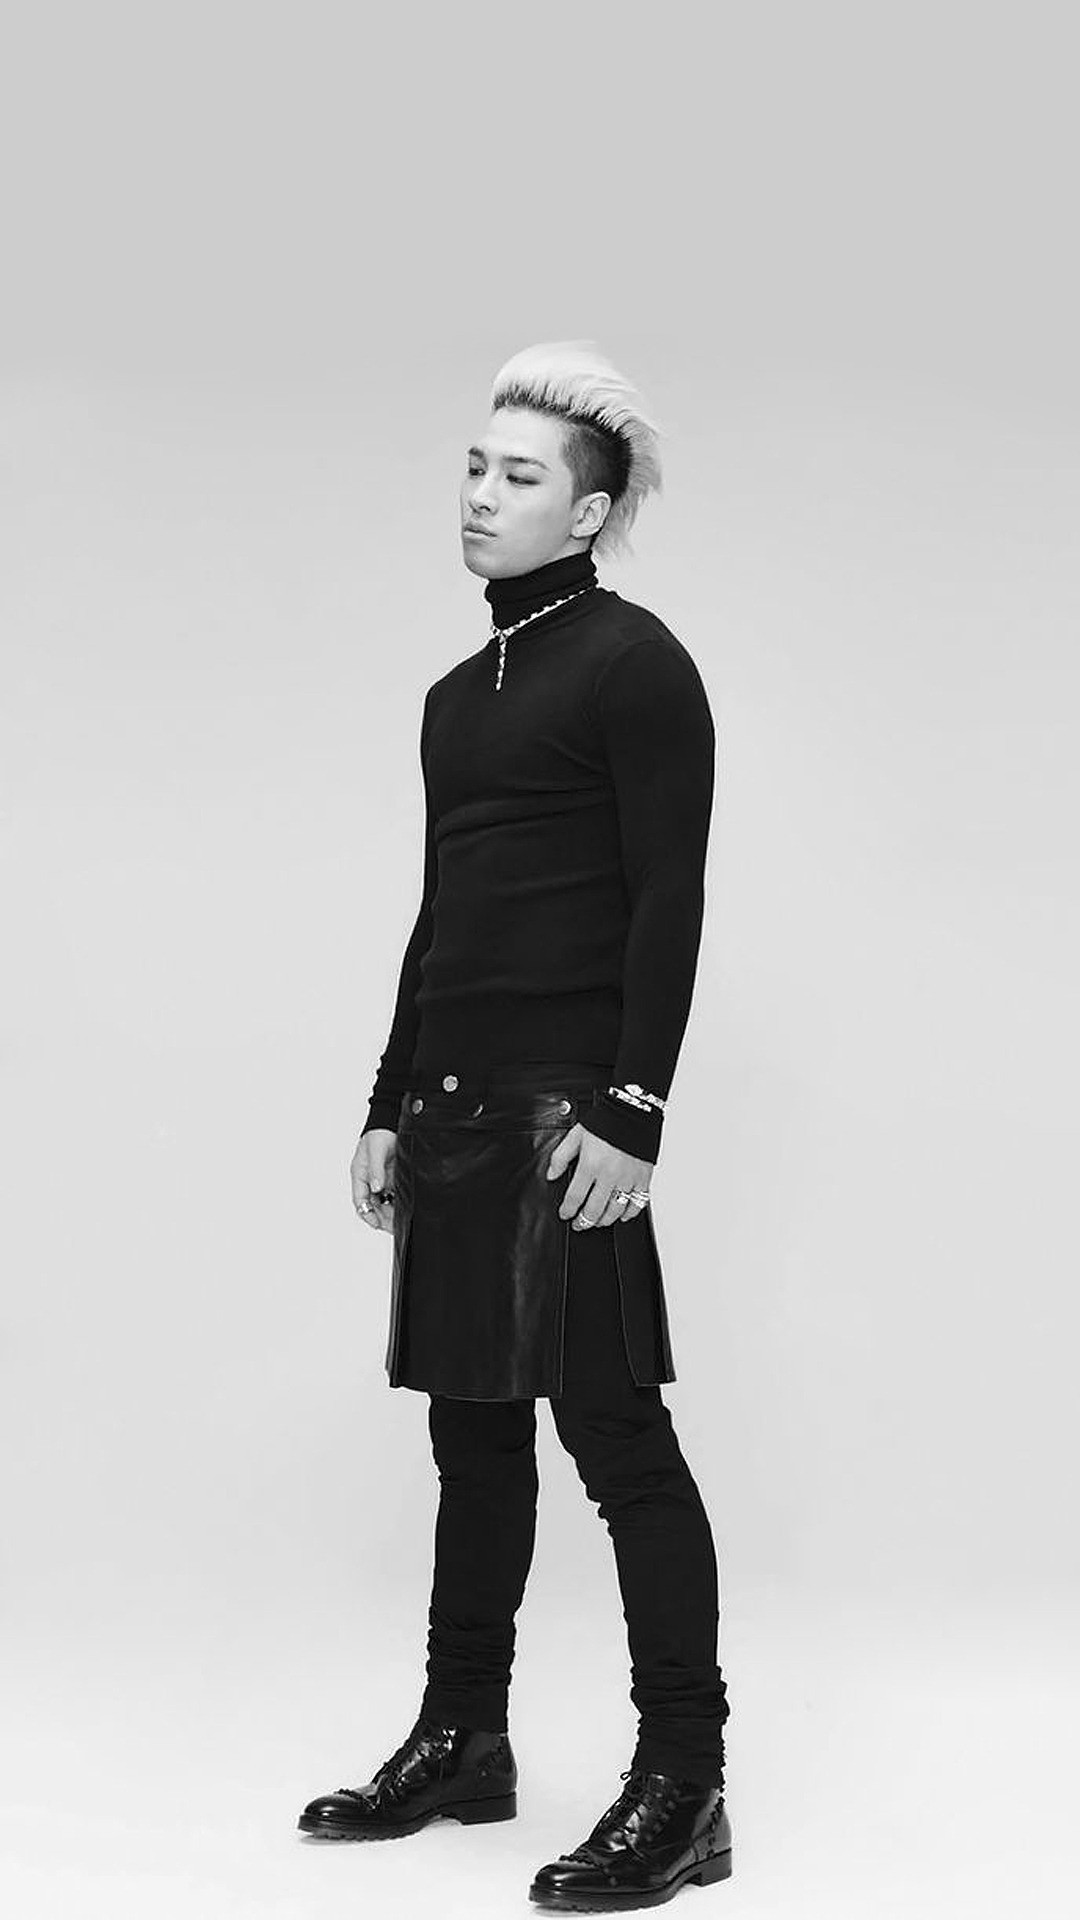 Big Bang Bigbang Taeyang Dong Youngbae Taeyang Wallpaper G Dragon Lockscreen 1080x19 Wallpaper Teahub Io